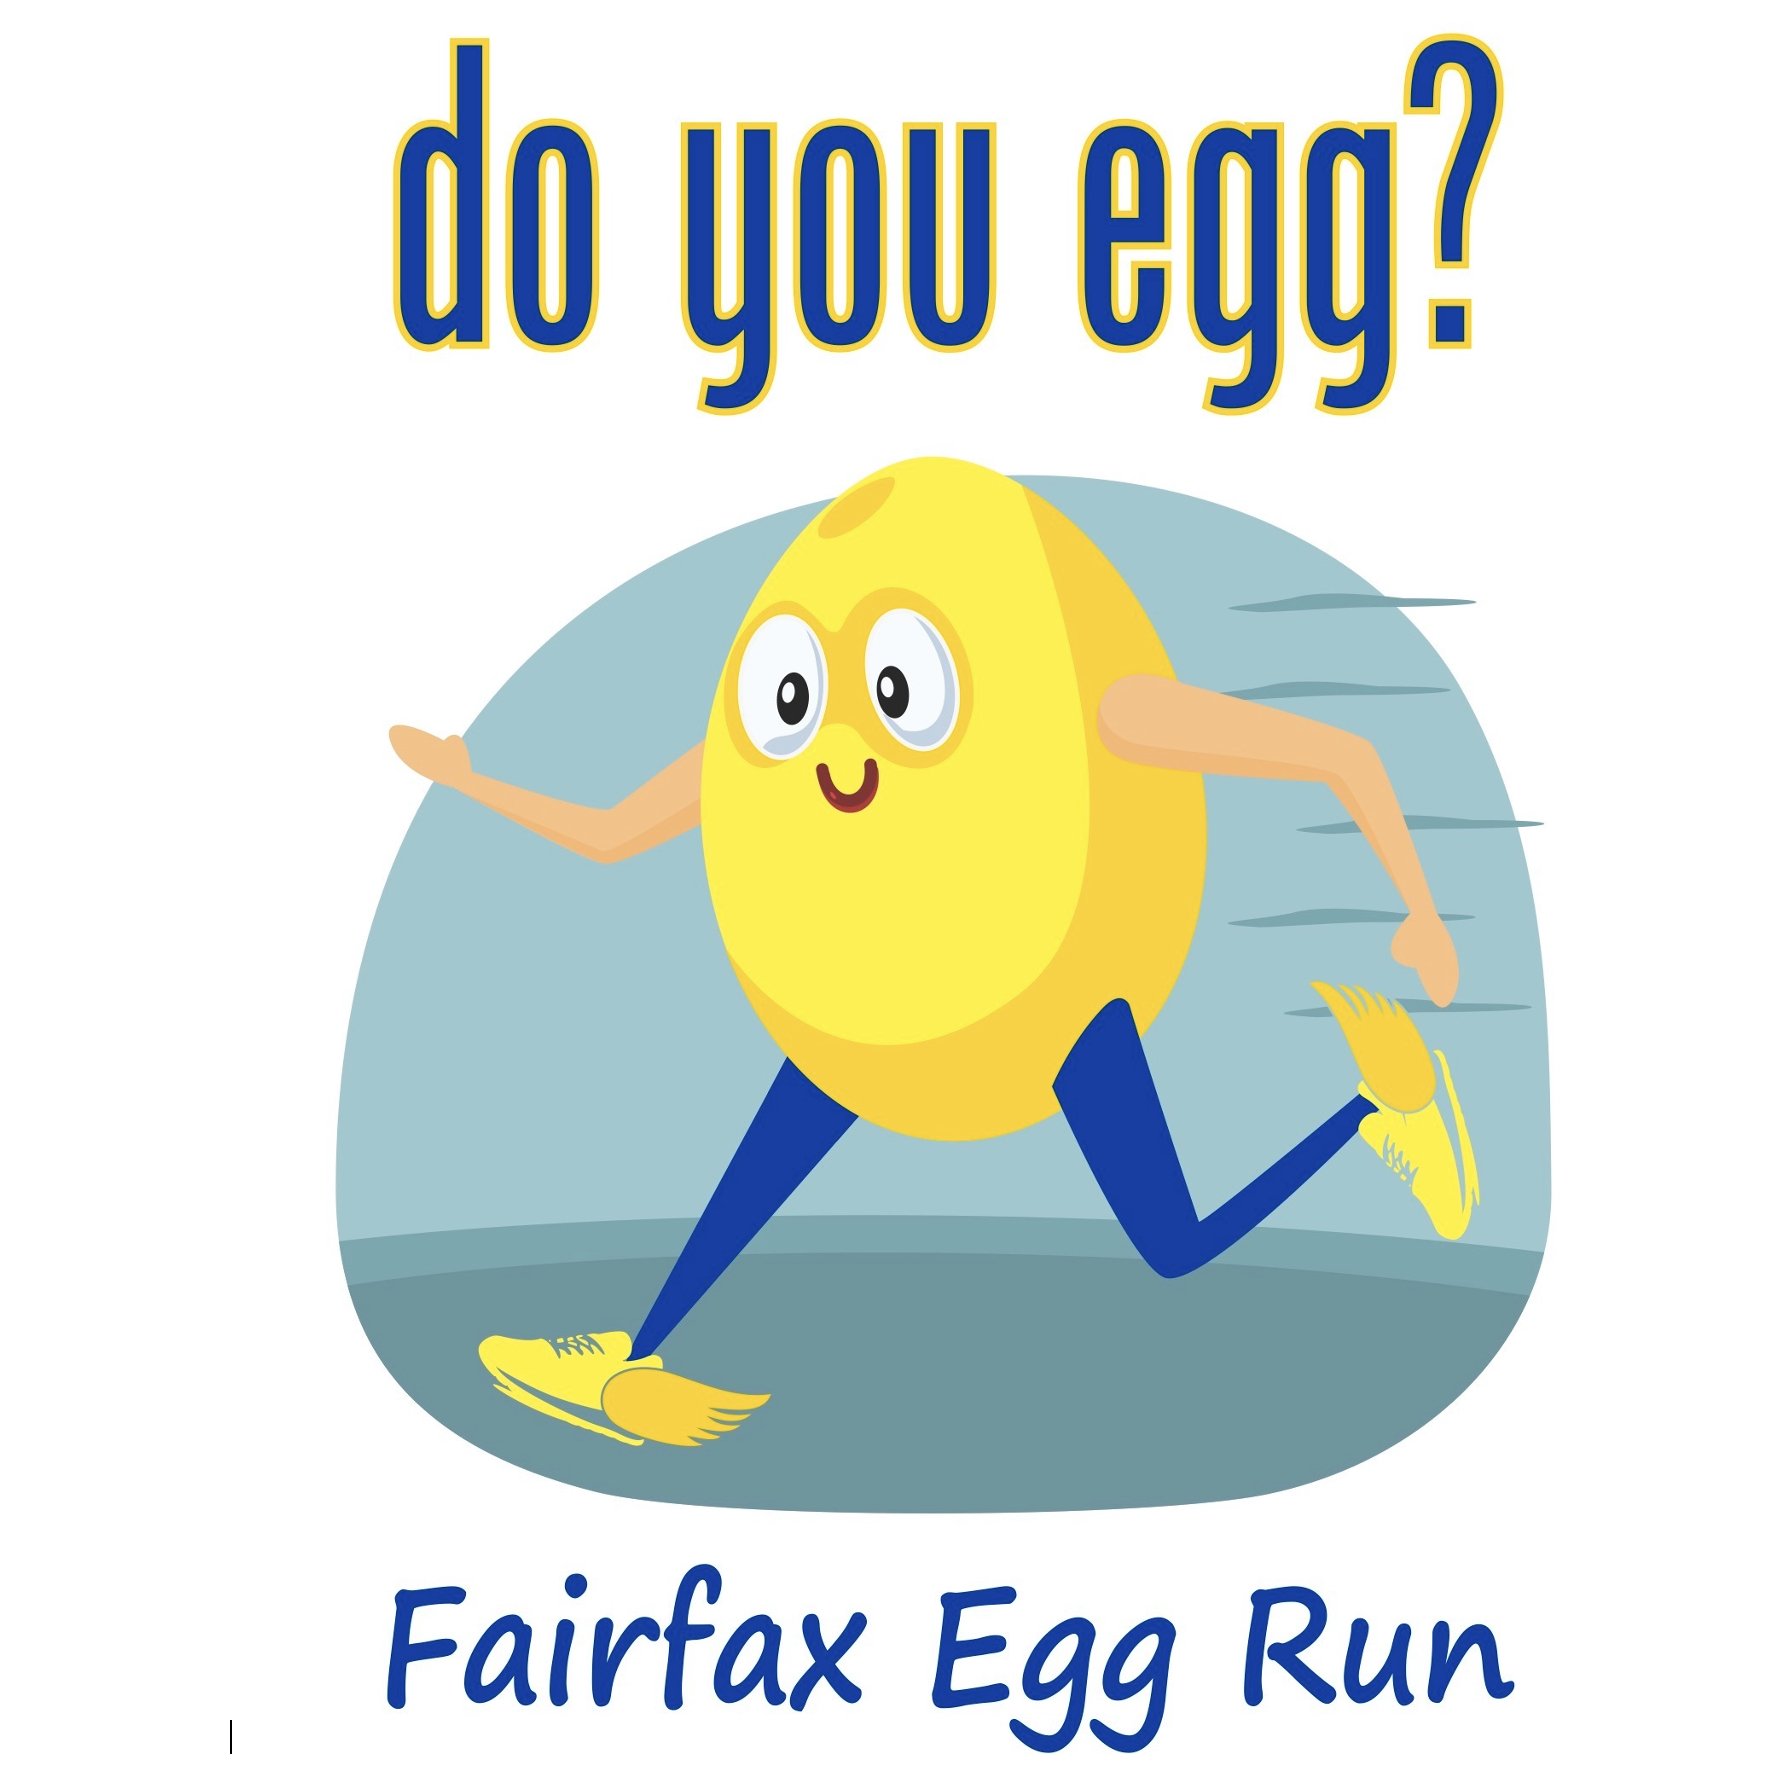 Fairfax Egg Run logo on RaceRaves